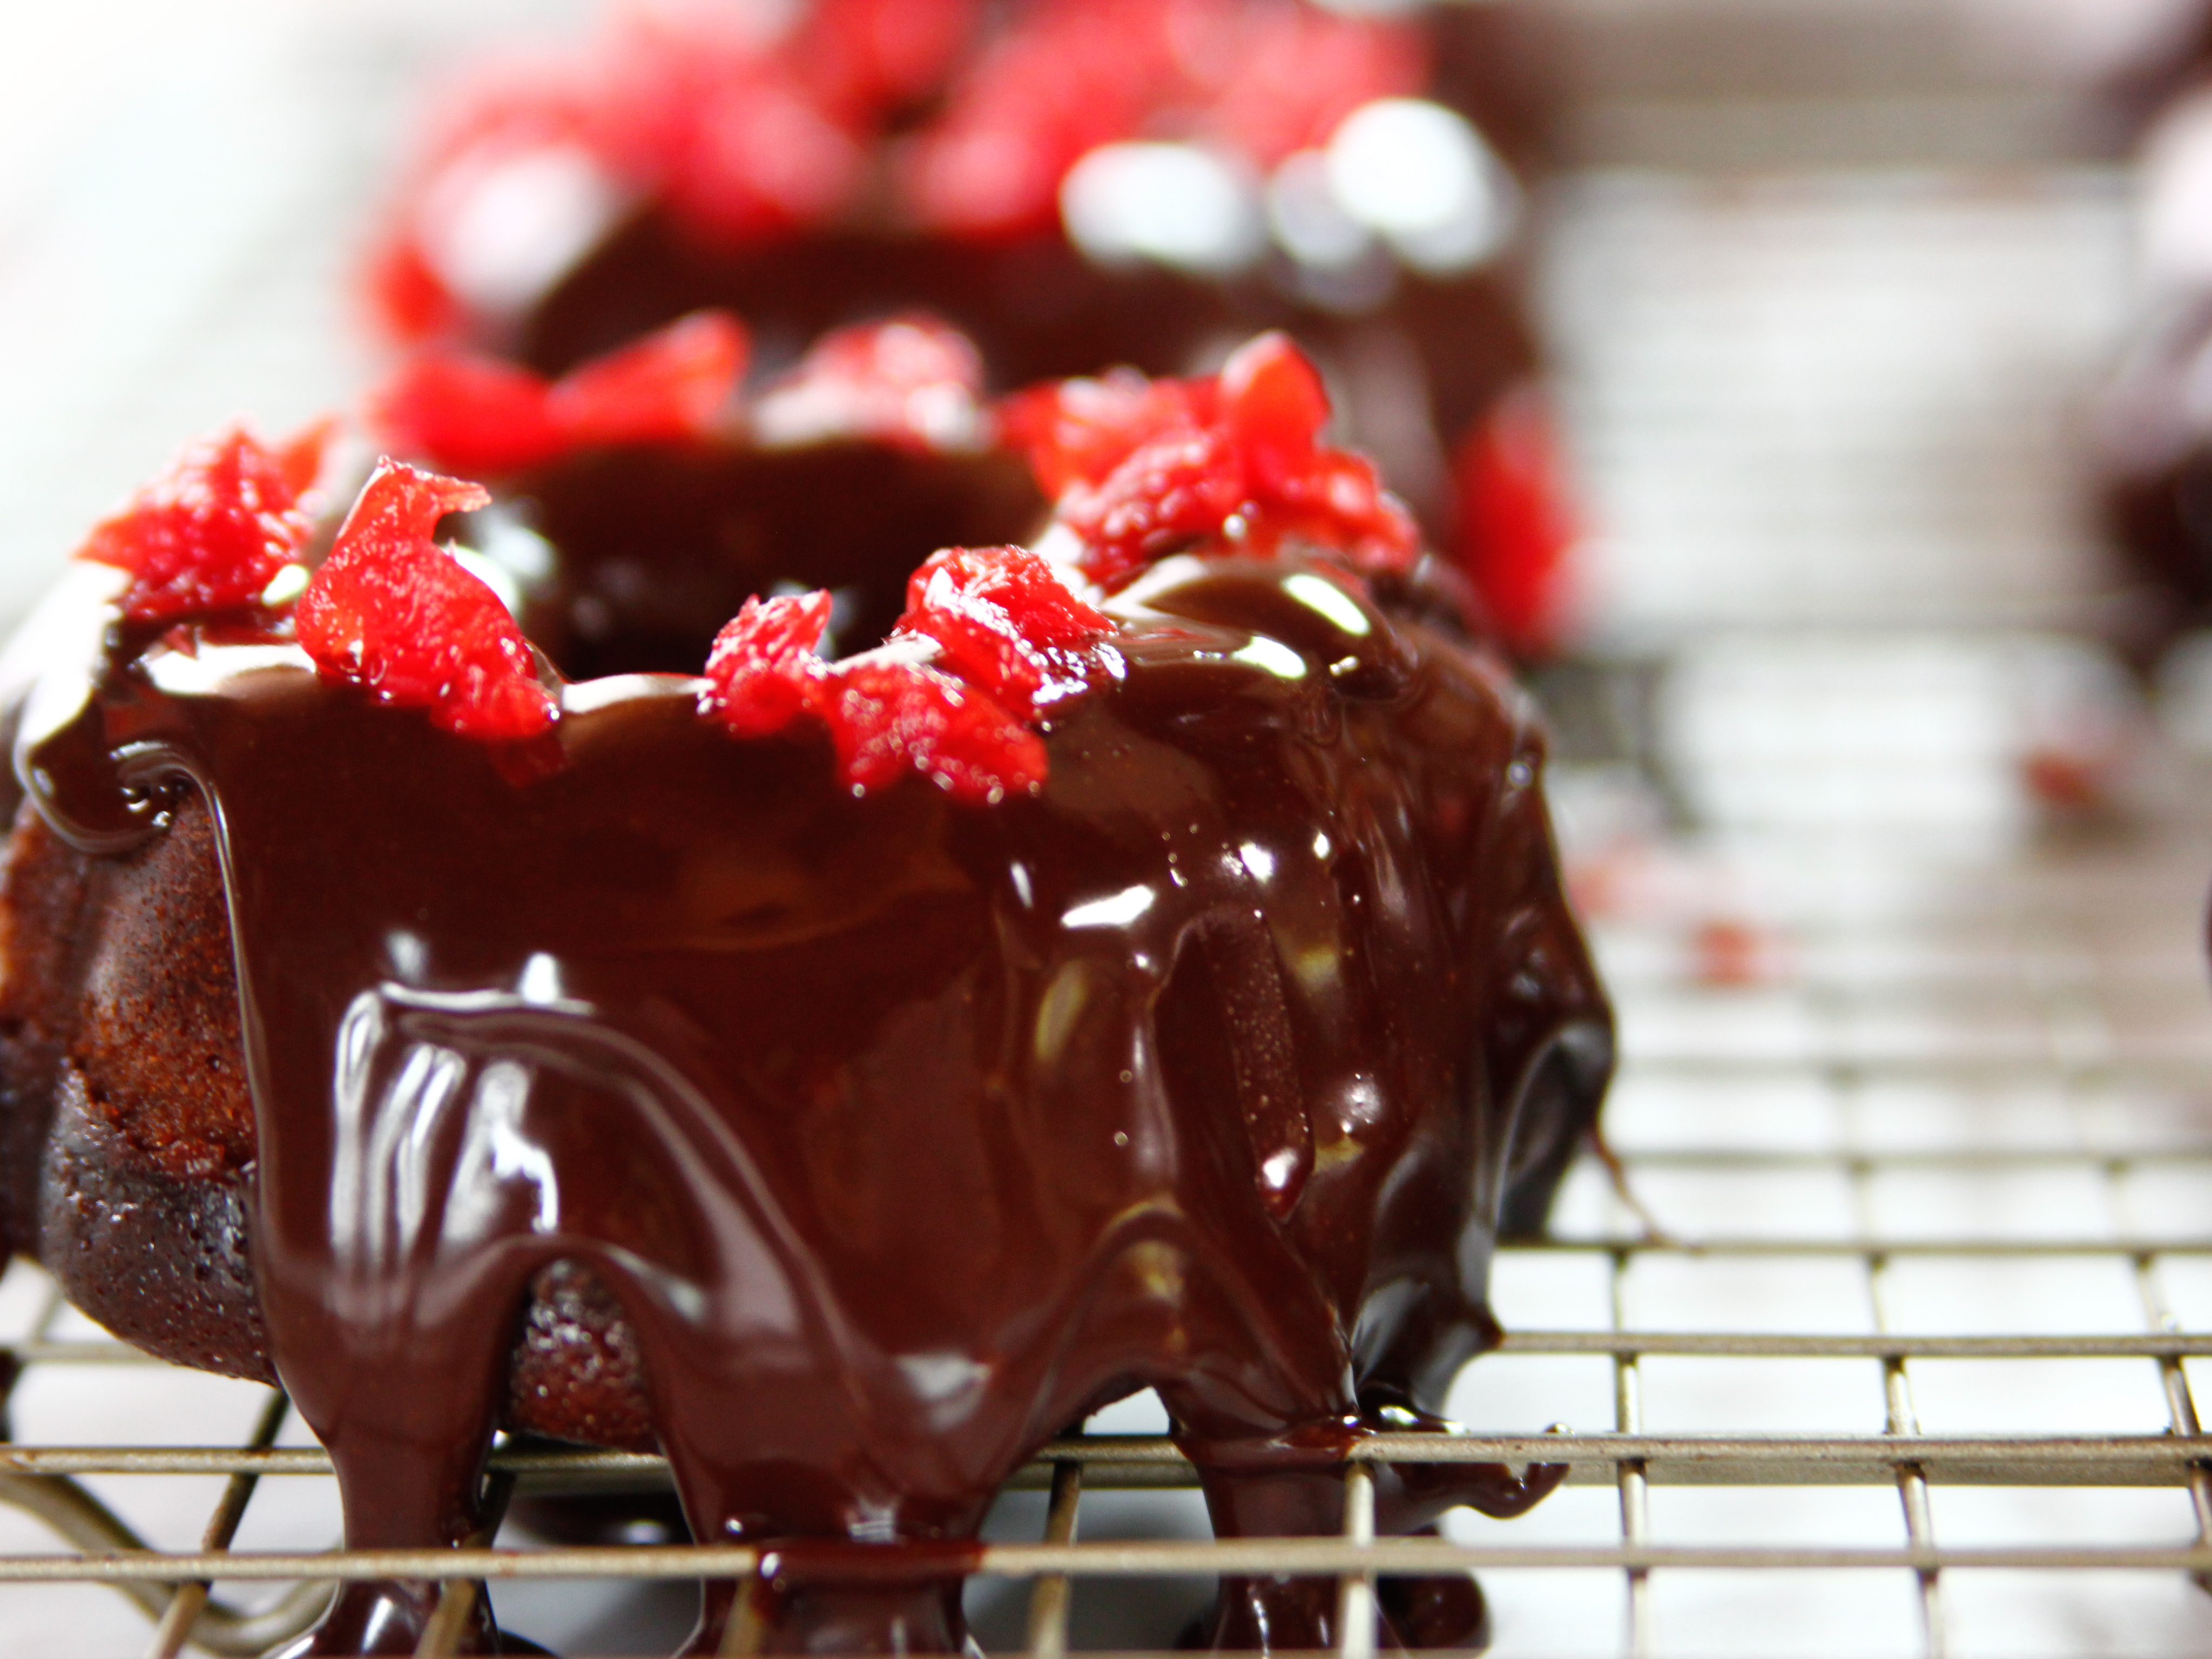 https://www.foodnetwork.com/content/dam/images/food/fullset/2016/5/26/1/WU1311H_Mini-Chocolate-Cherry-Bundt-Cake_s4x3.jpg